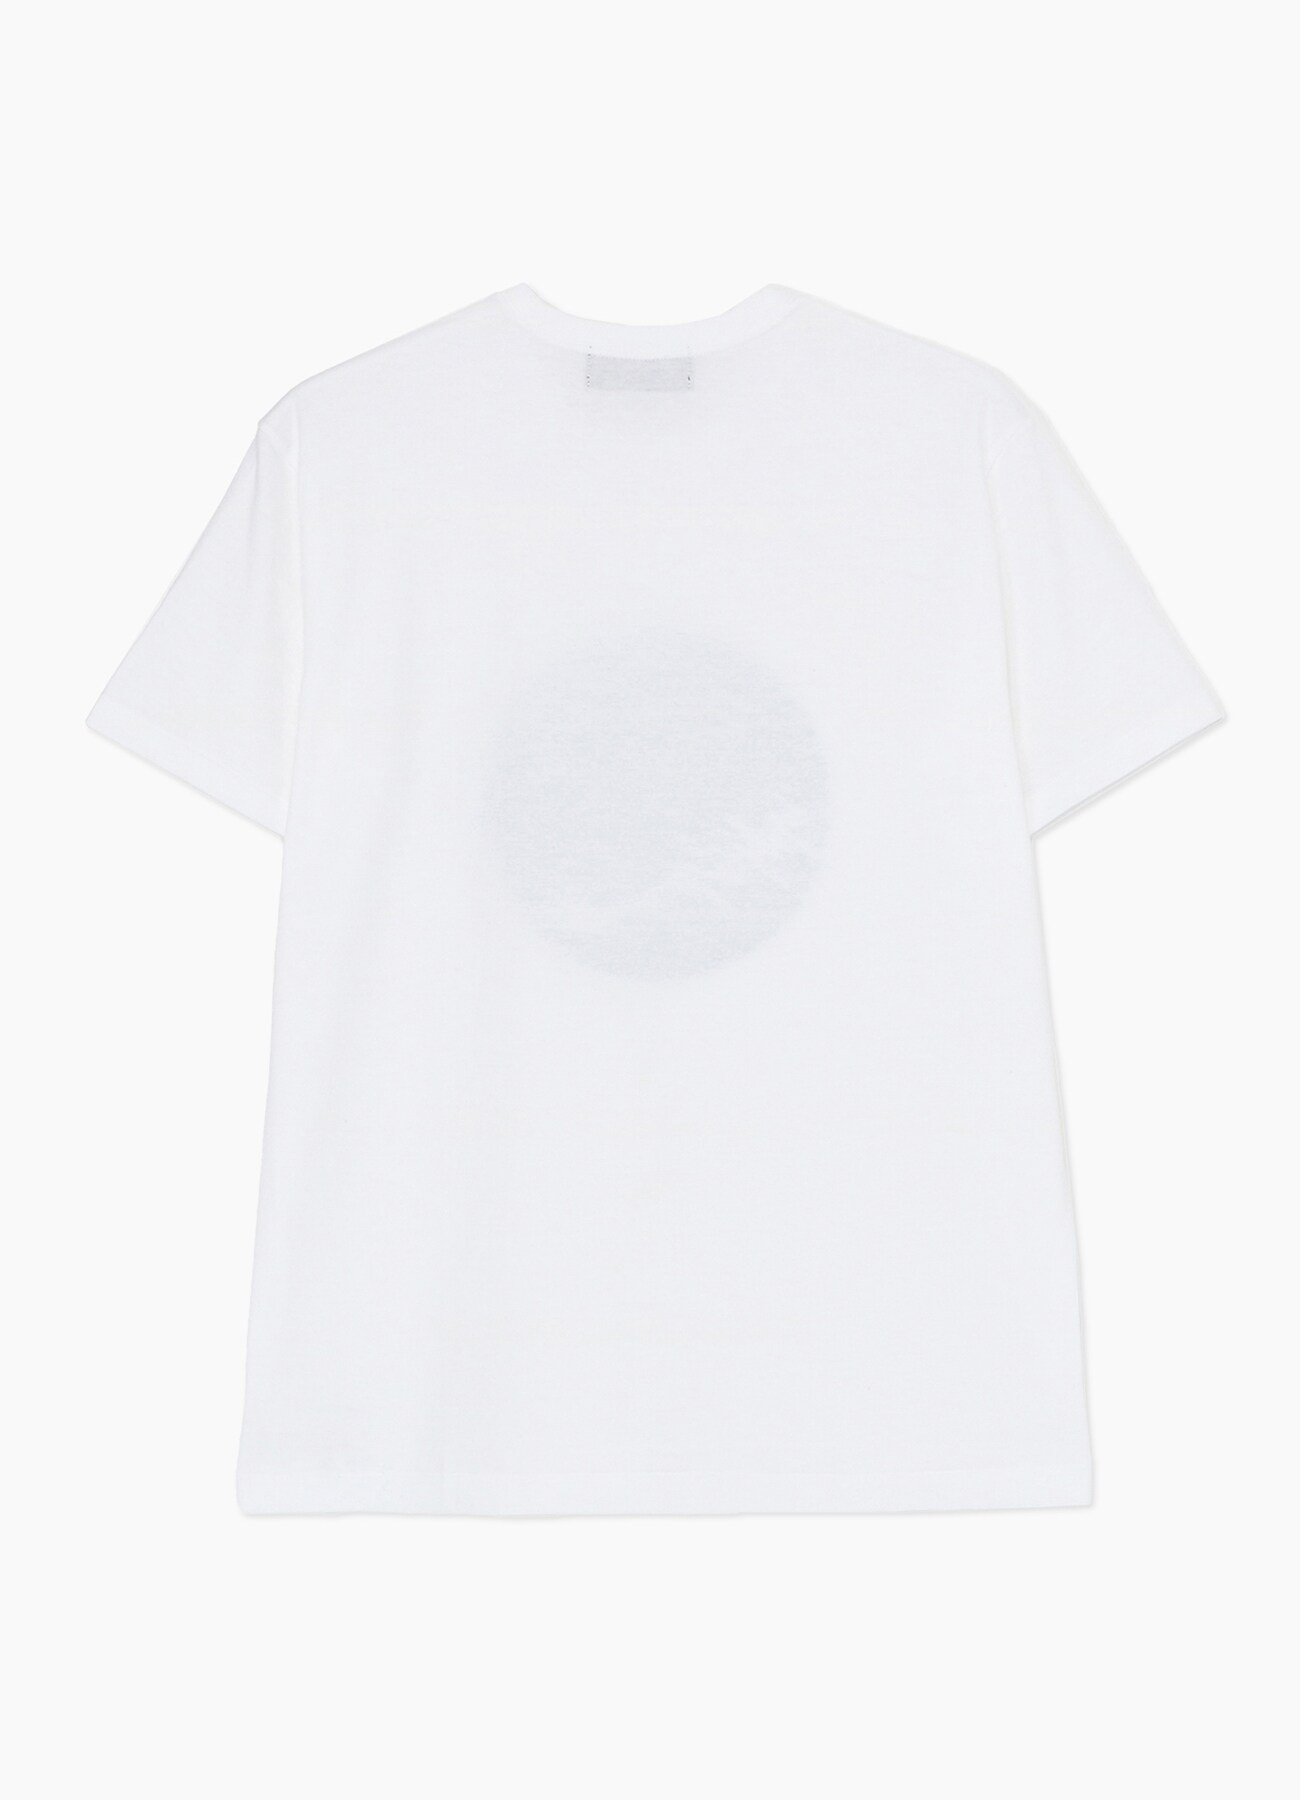 WILDSIDE Record T-shirt(S WHITE): YOHJI YAMAMOTO｜WILDSIDE YOHJI